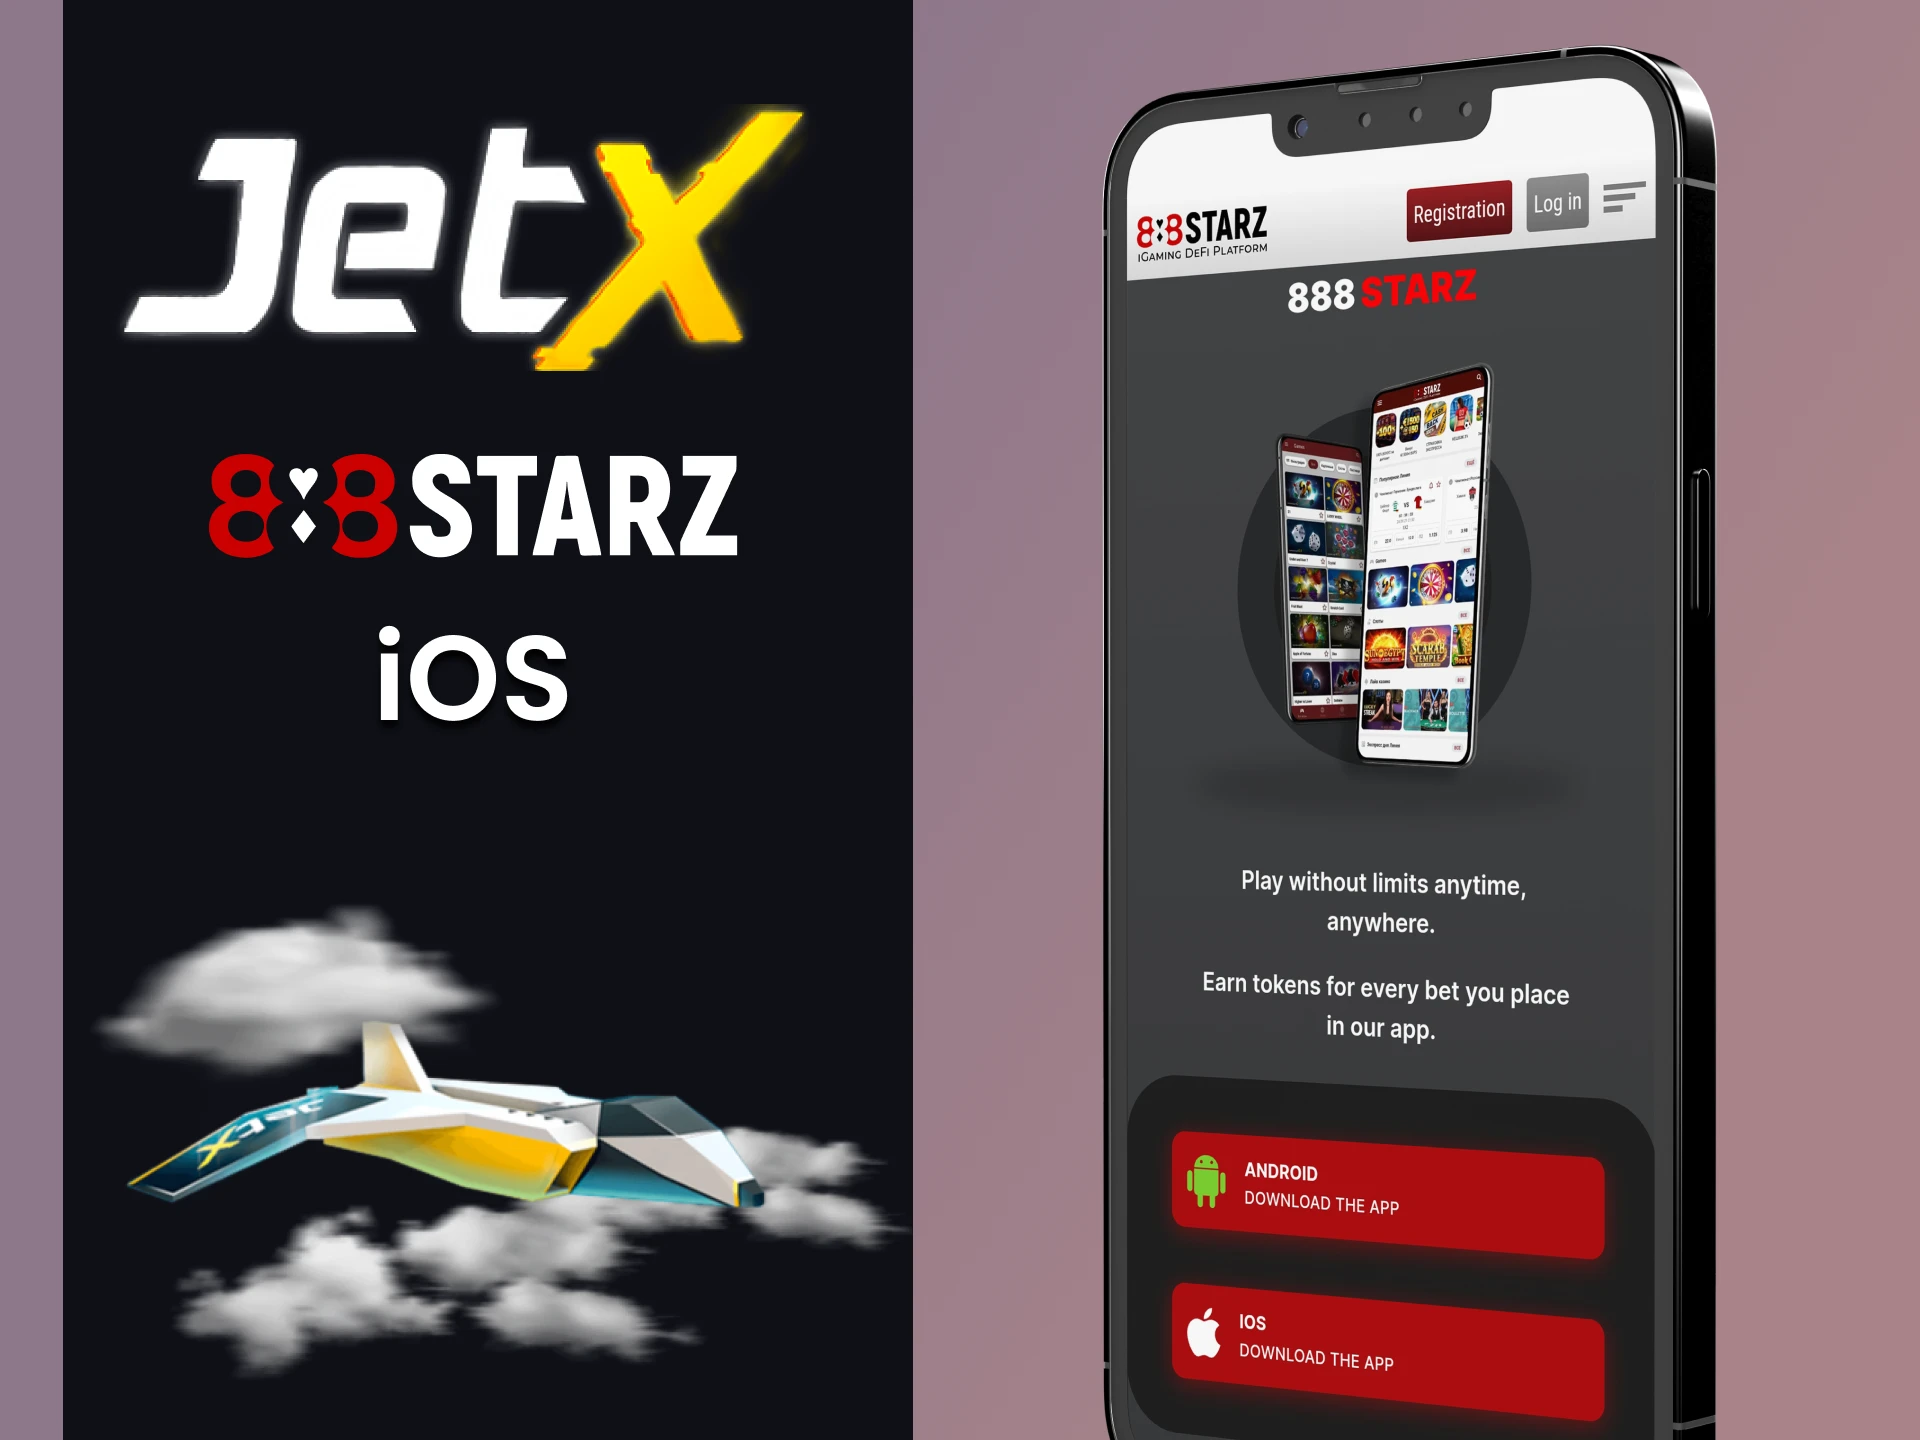 Install the 888starz app on iOS to play JetX.